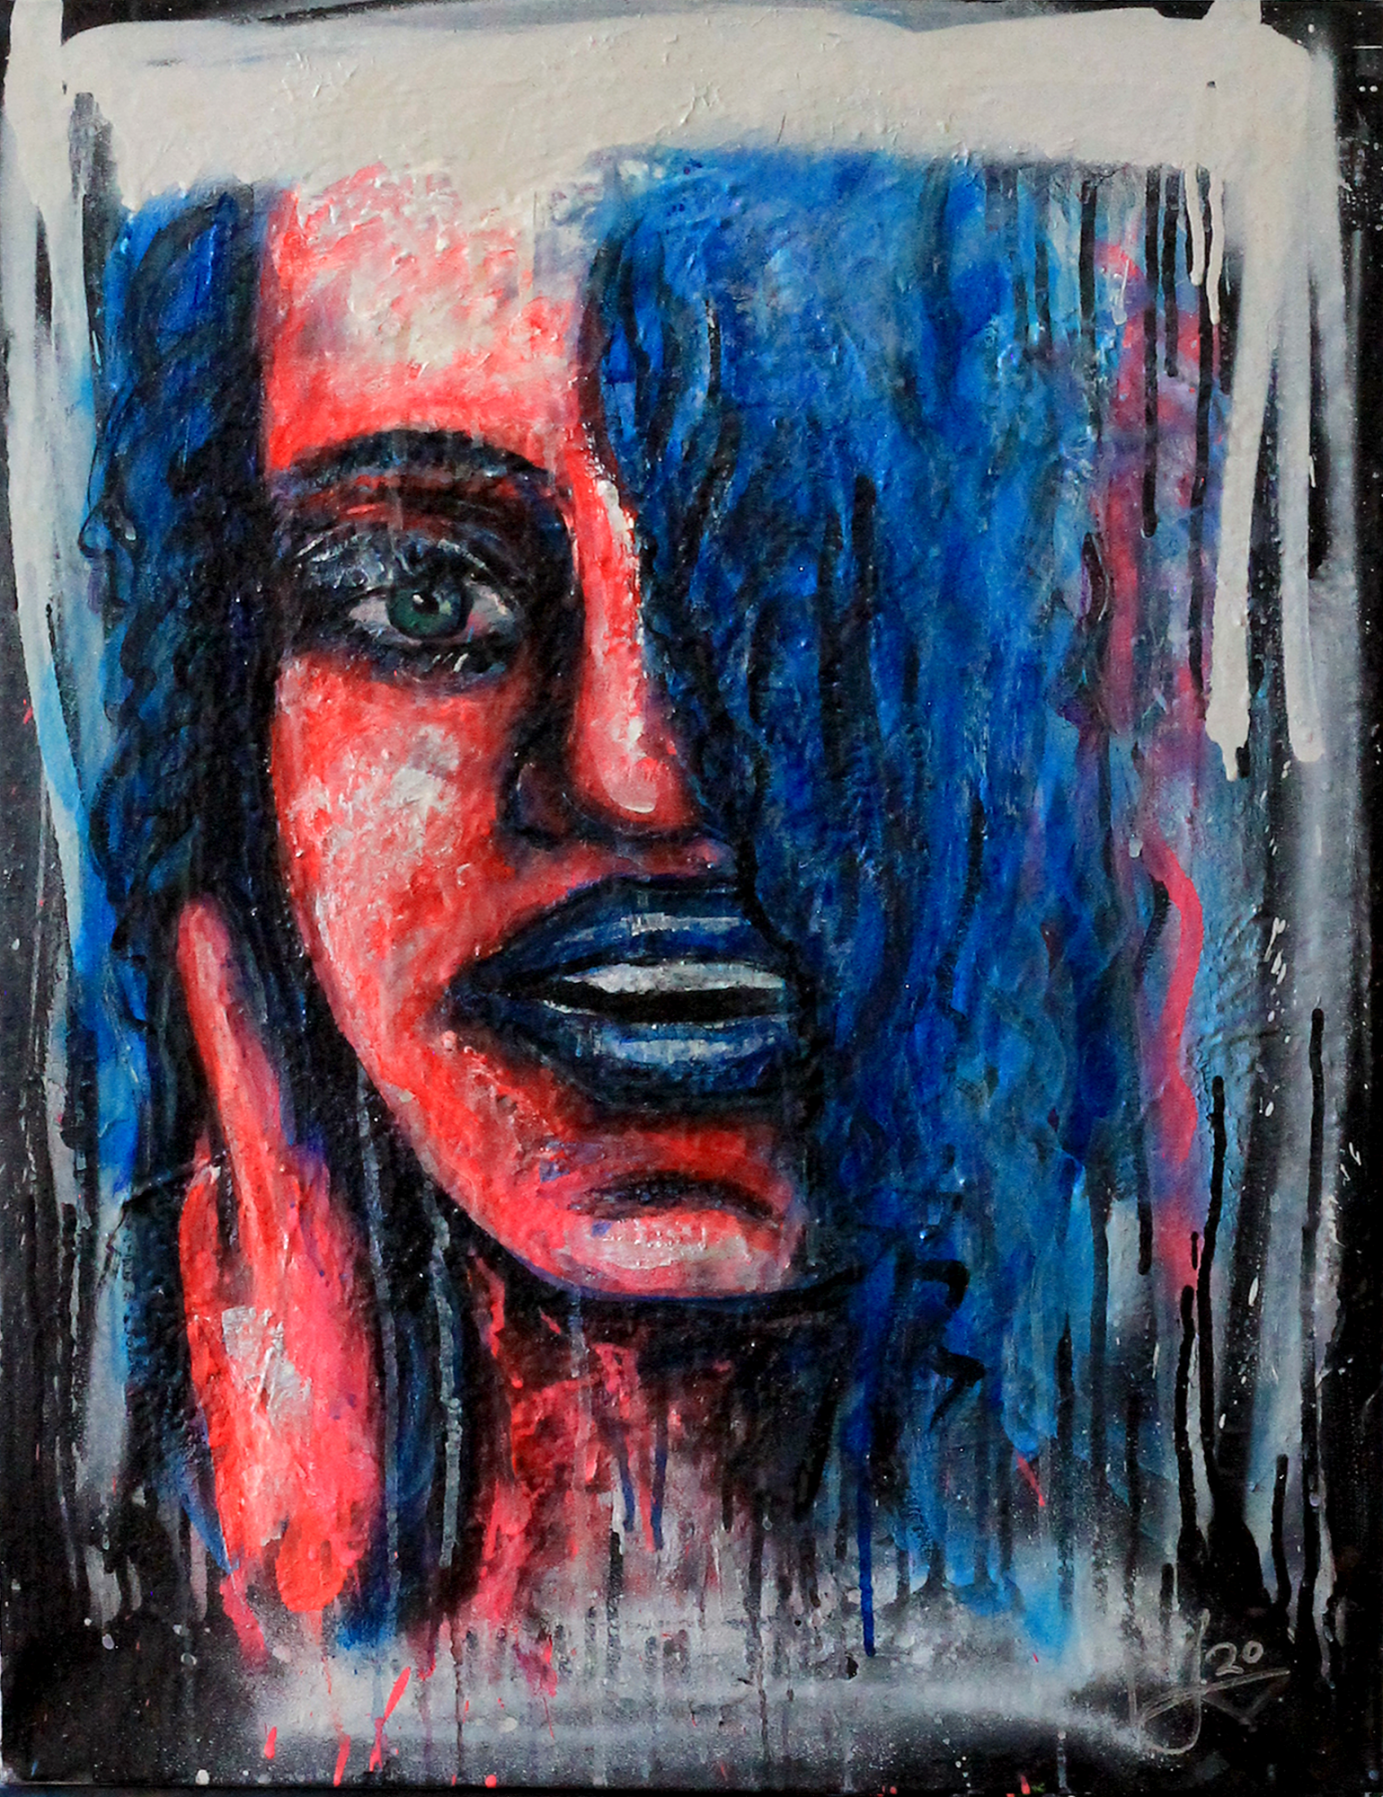 Mixed medium on canvas